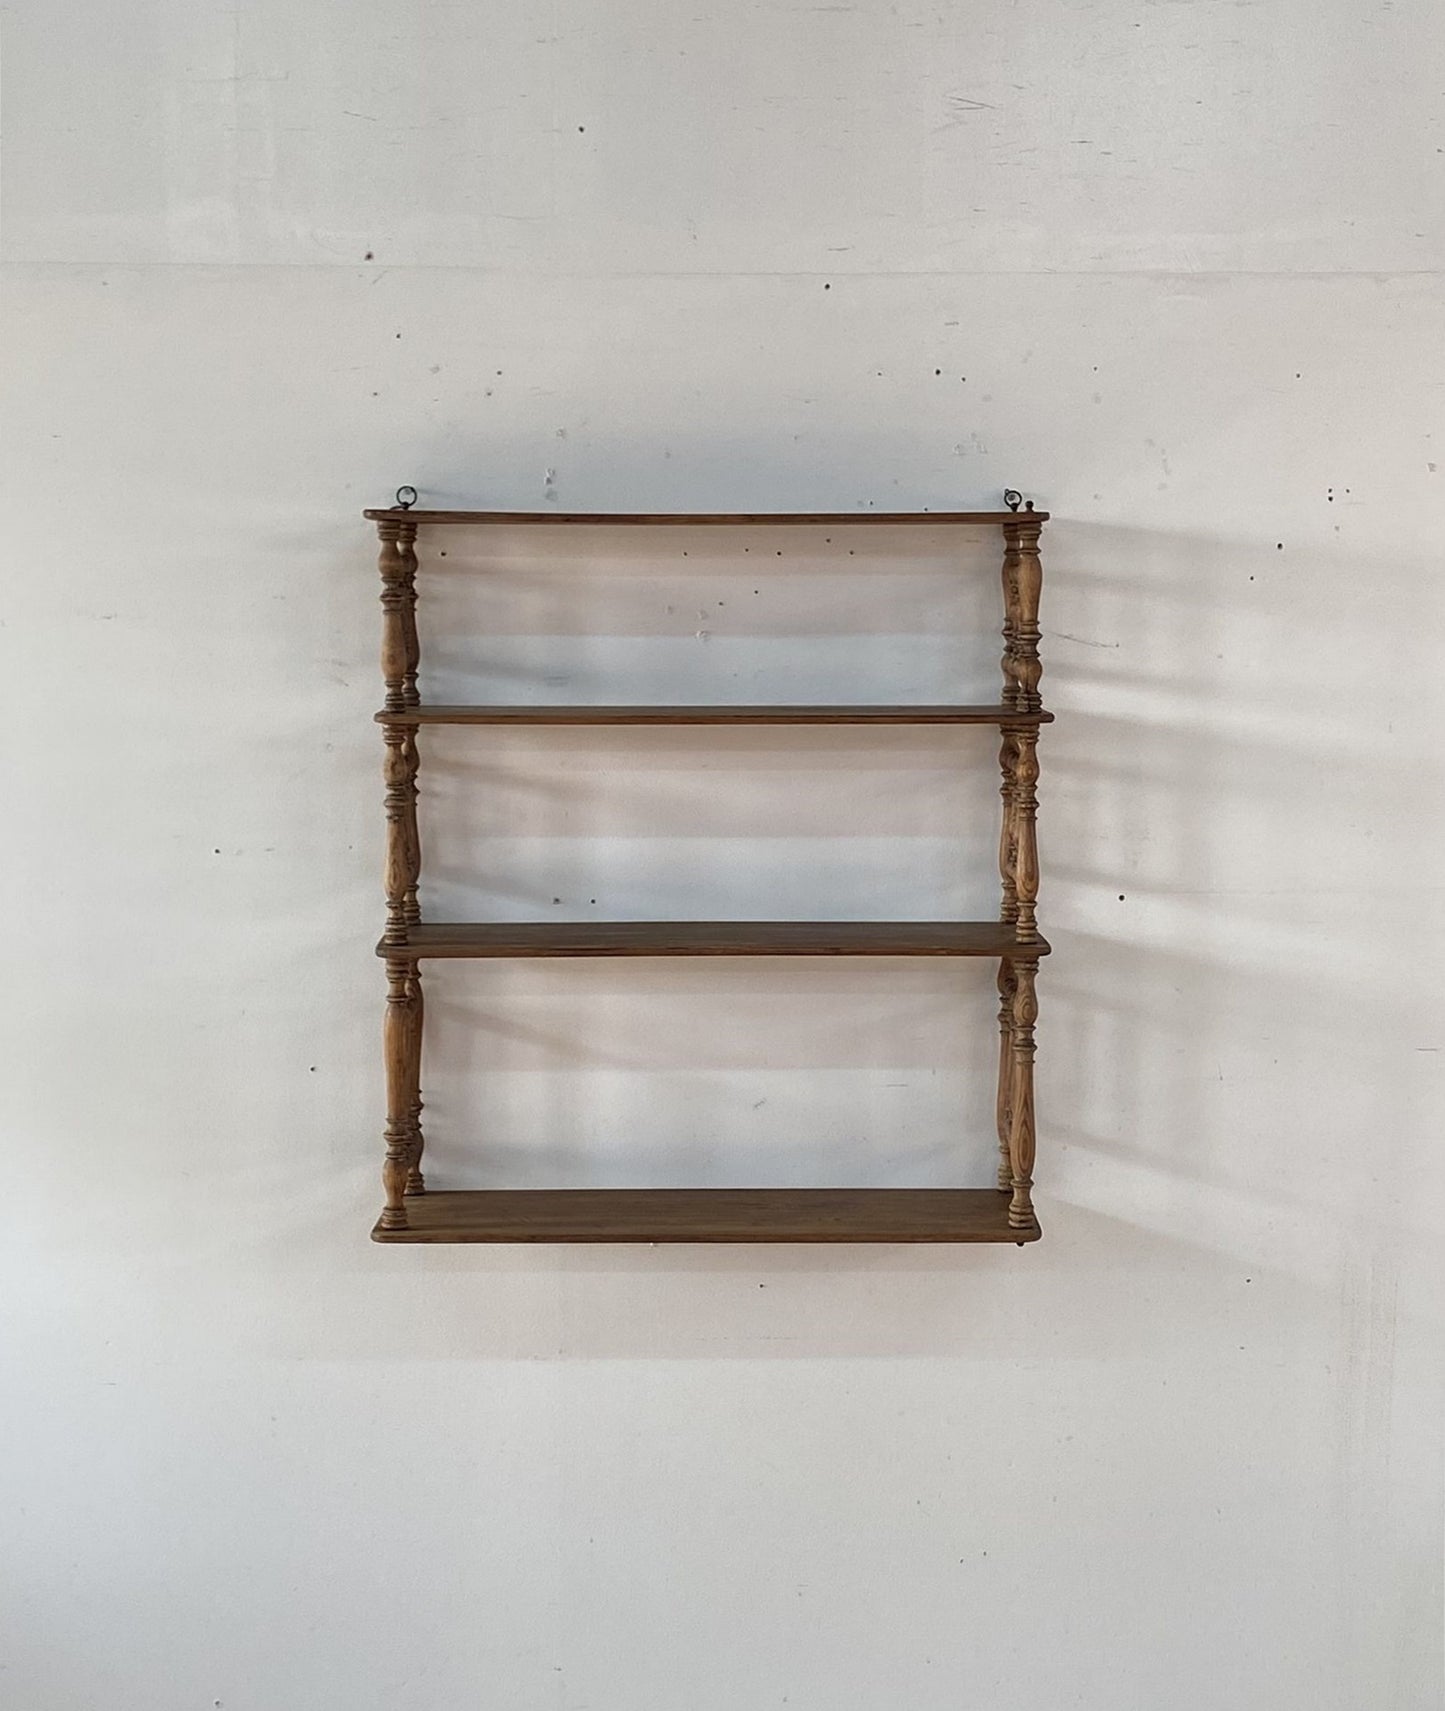 Wall Shelf